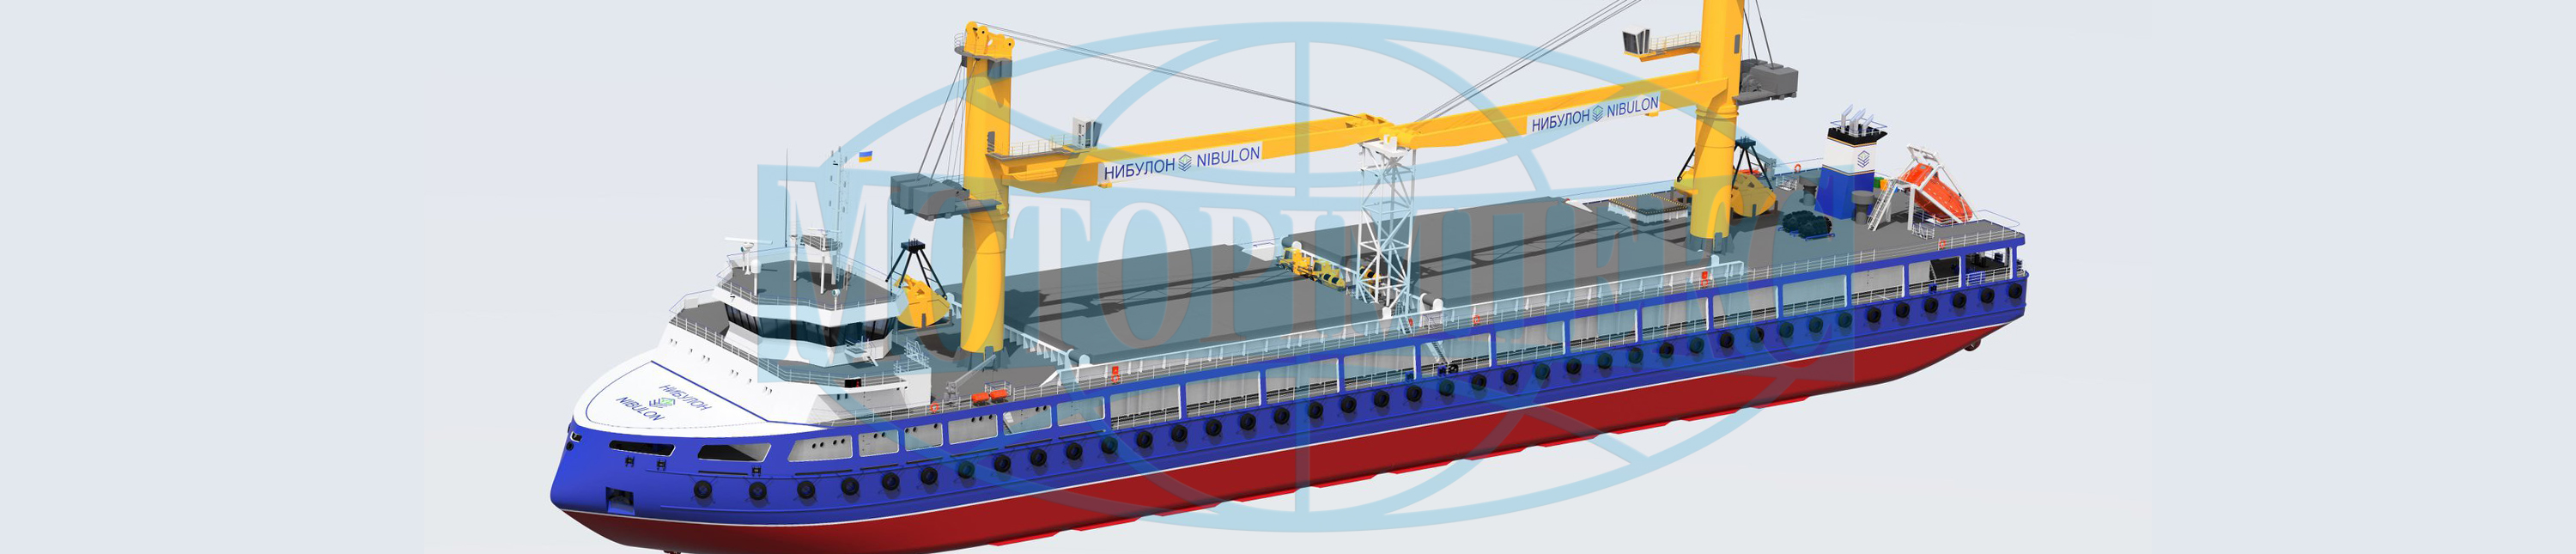 Turnkey hydraulics – hydraulic drive for boat hatgnes for the Nibulon Max ship